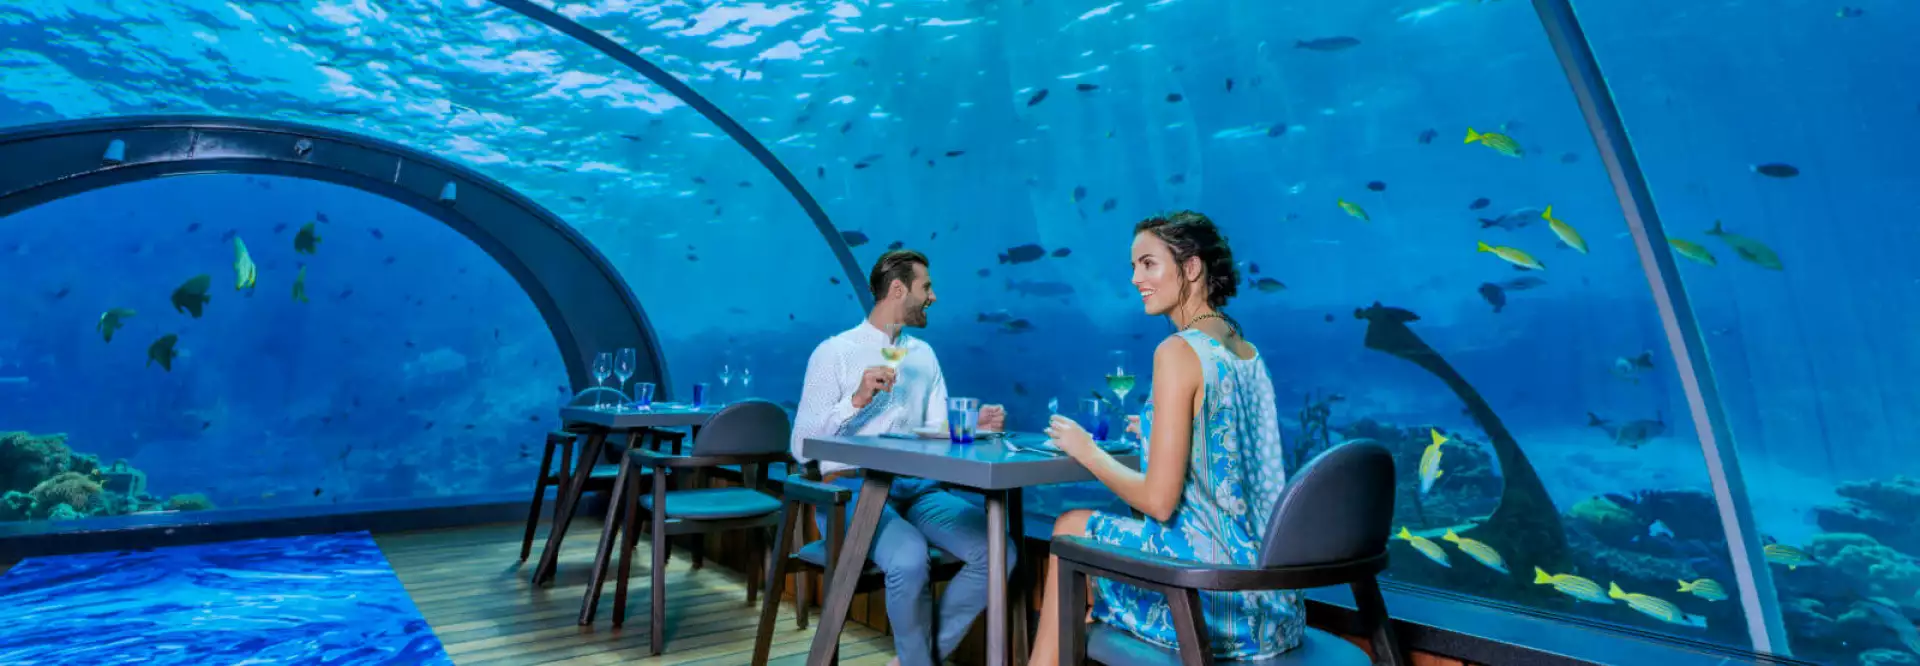 Hurawalhi-5.8-Undersea-Restaurant-Couple.jpg